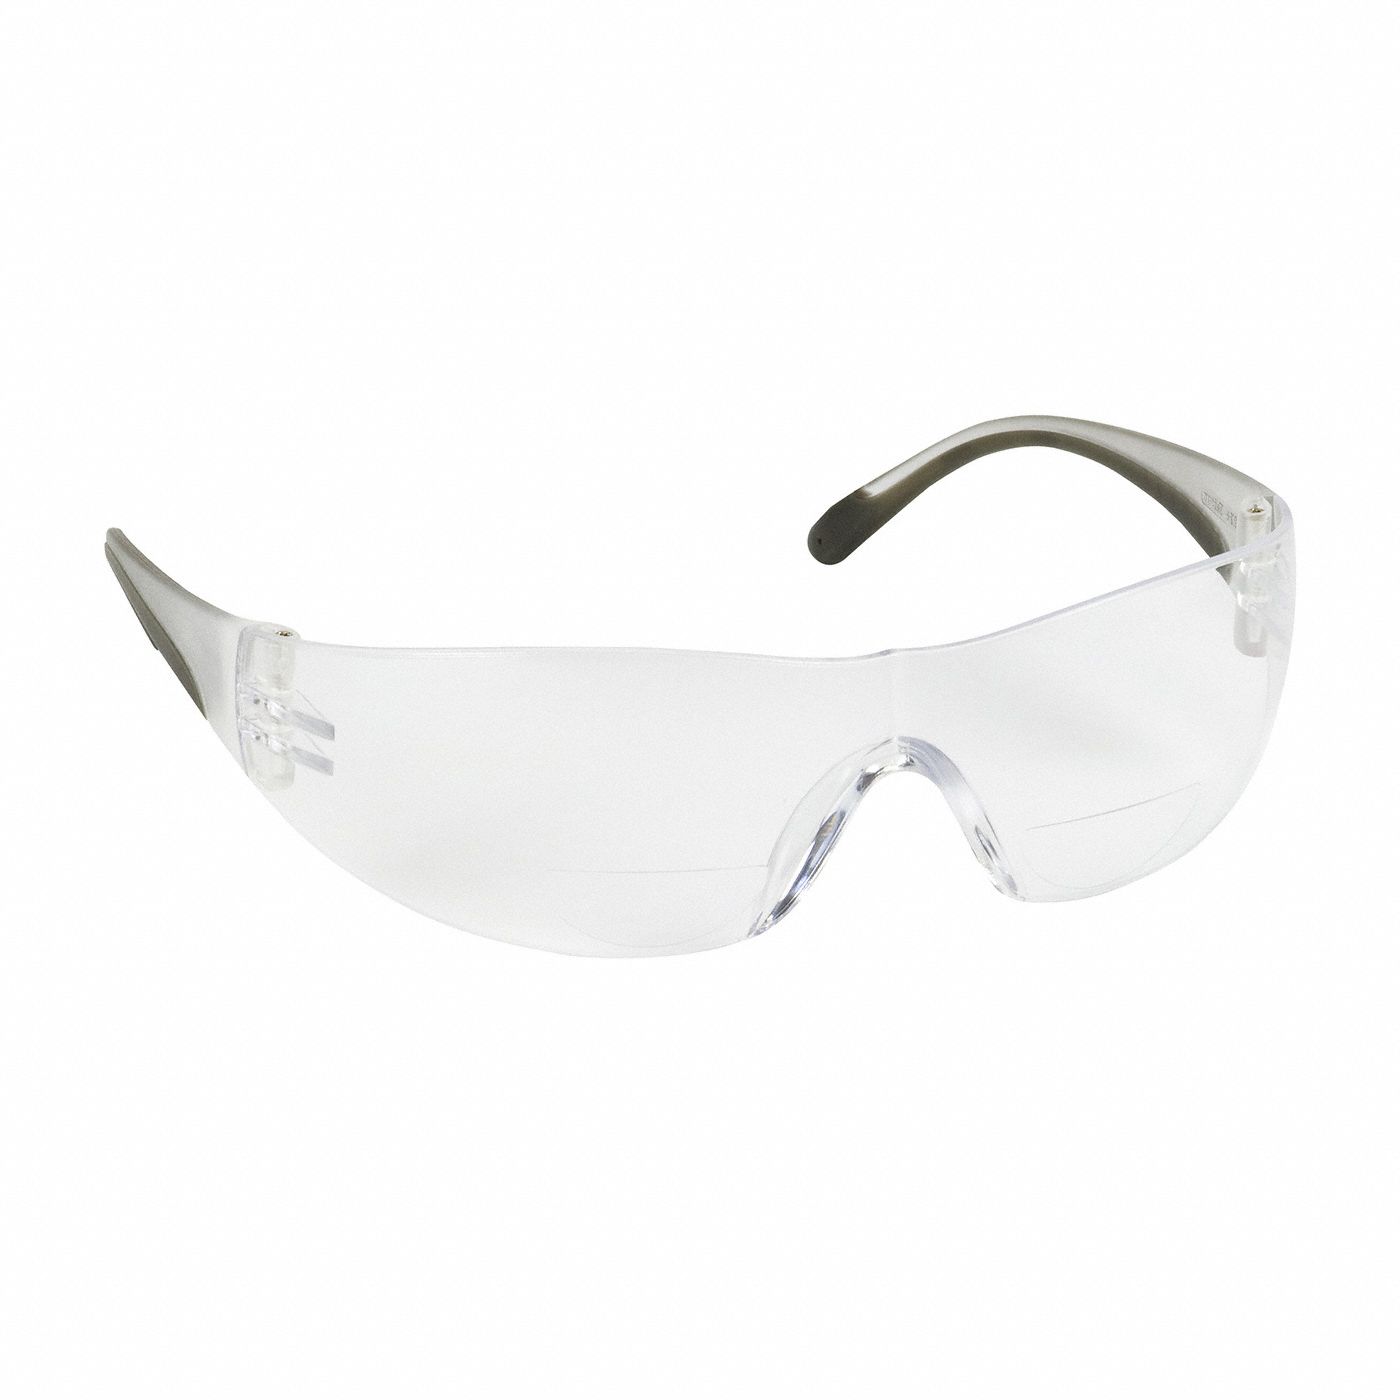 Bifocal Safety Reading Glasses: Anti-Scratch, No Foam Lining, Wraparound Frame, +3.00